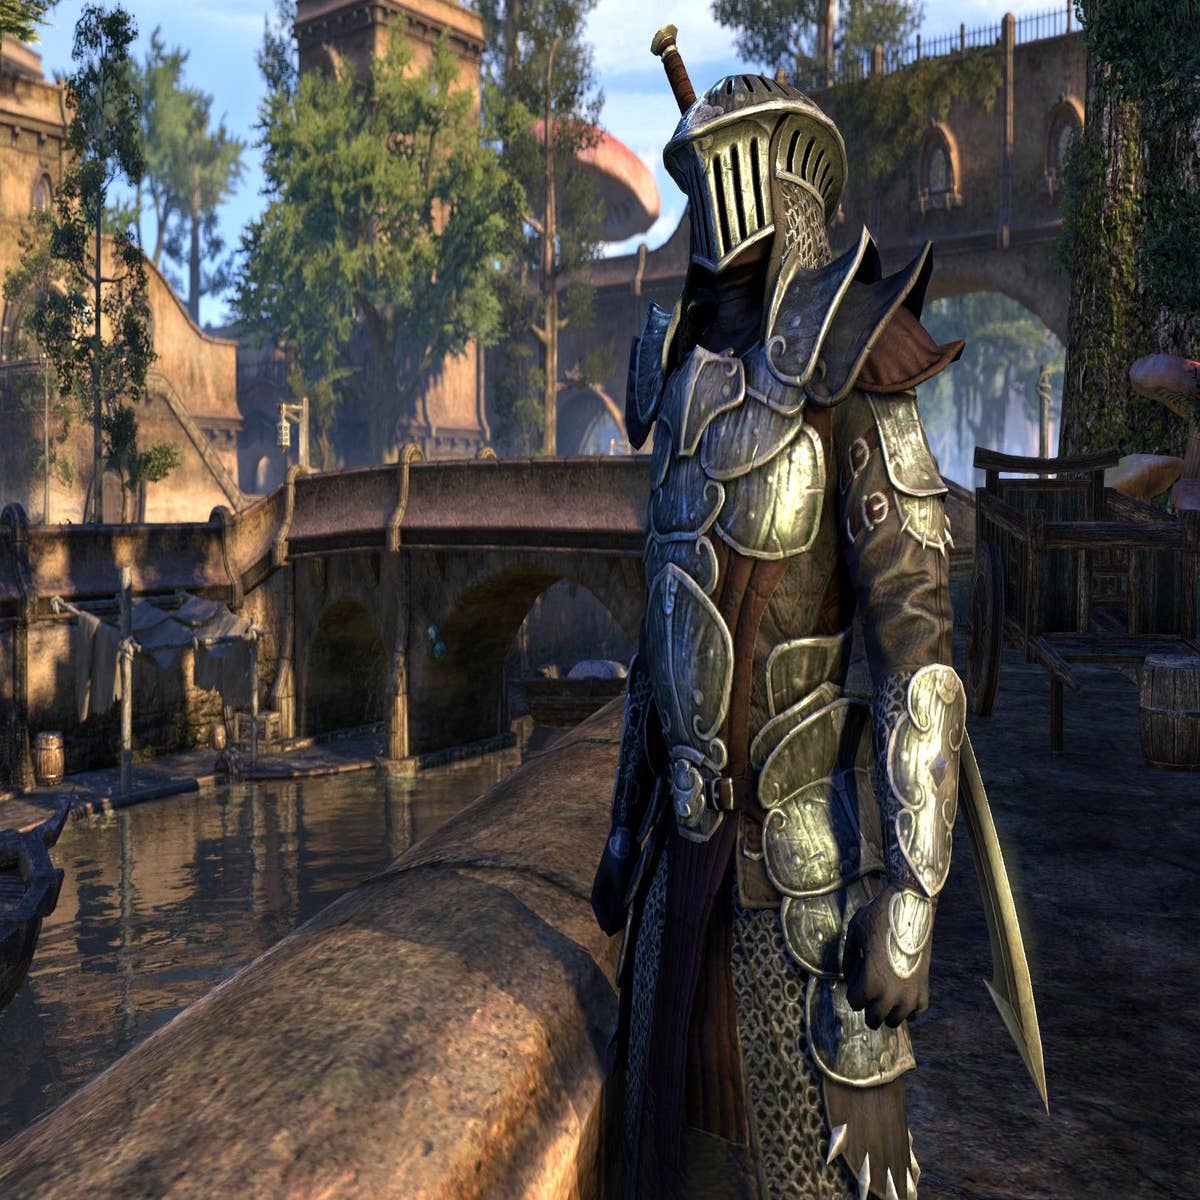 Elder Scrolls Online Is Dropping Year-Long Stories Moving Forward